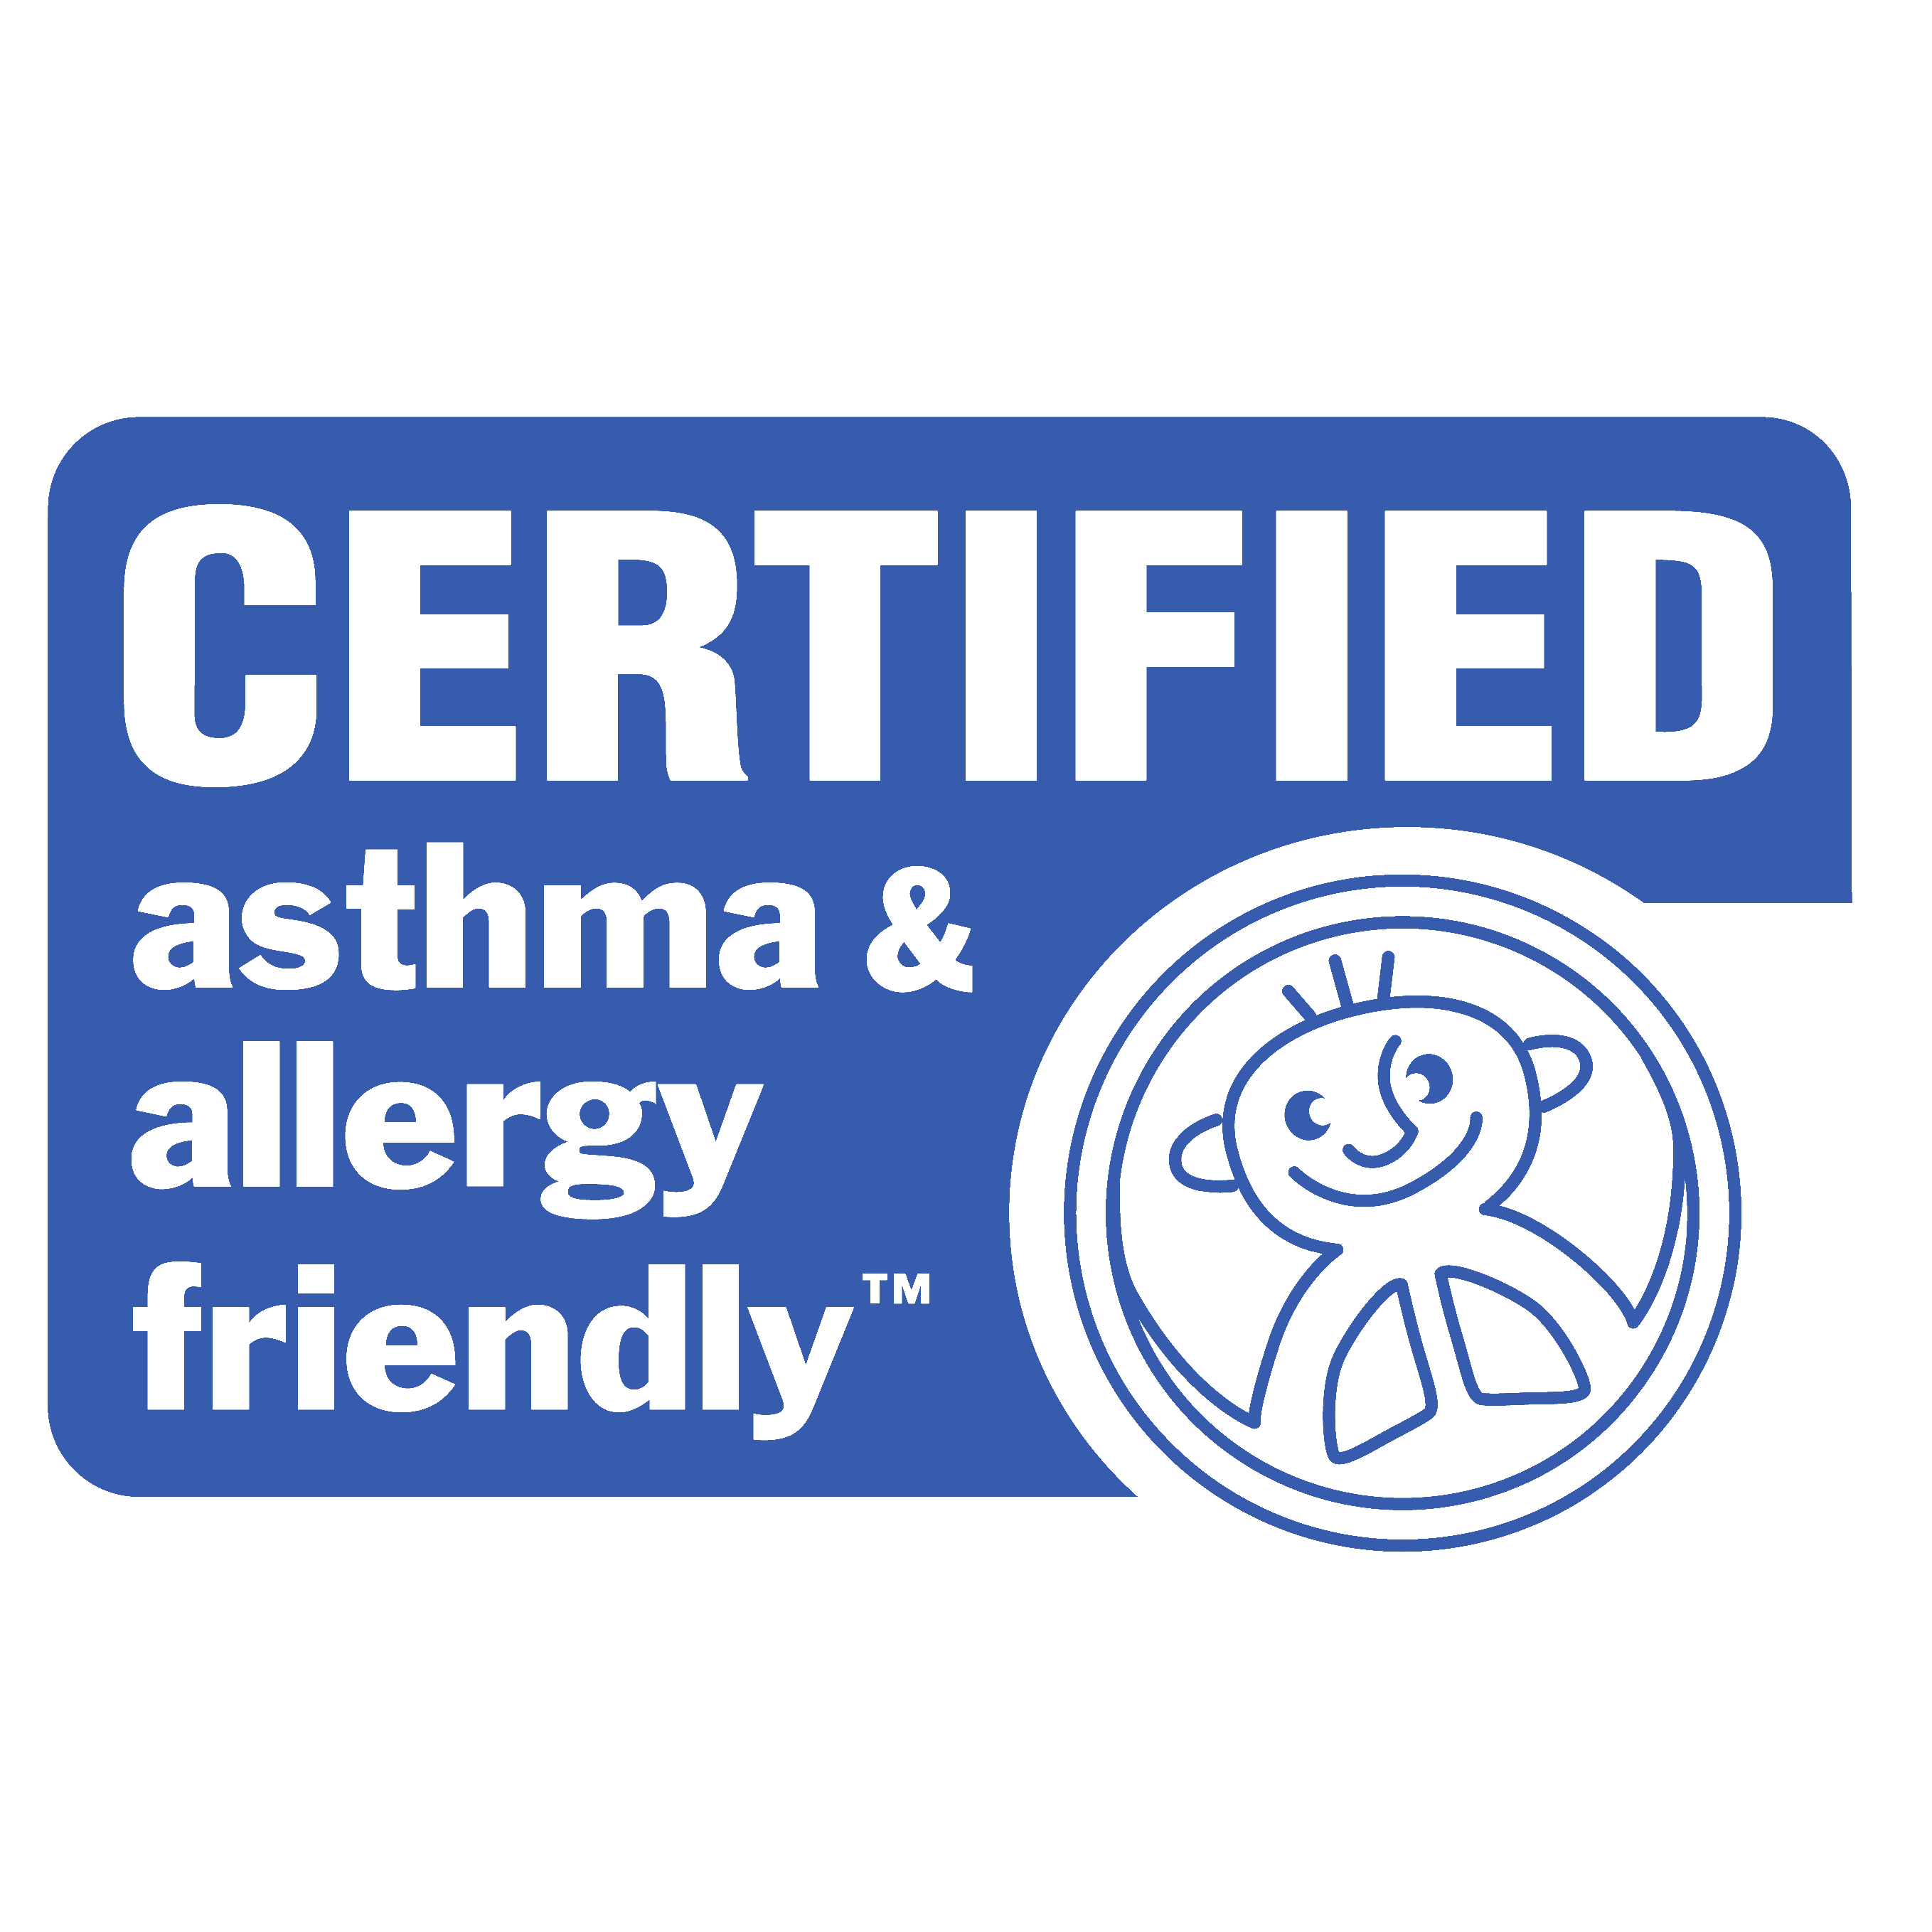 Certified Asthma & Allergy Friendly logo